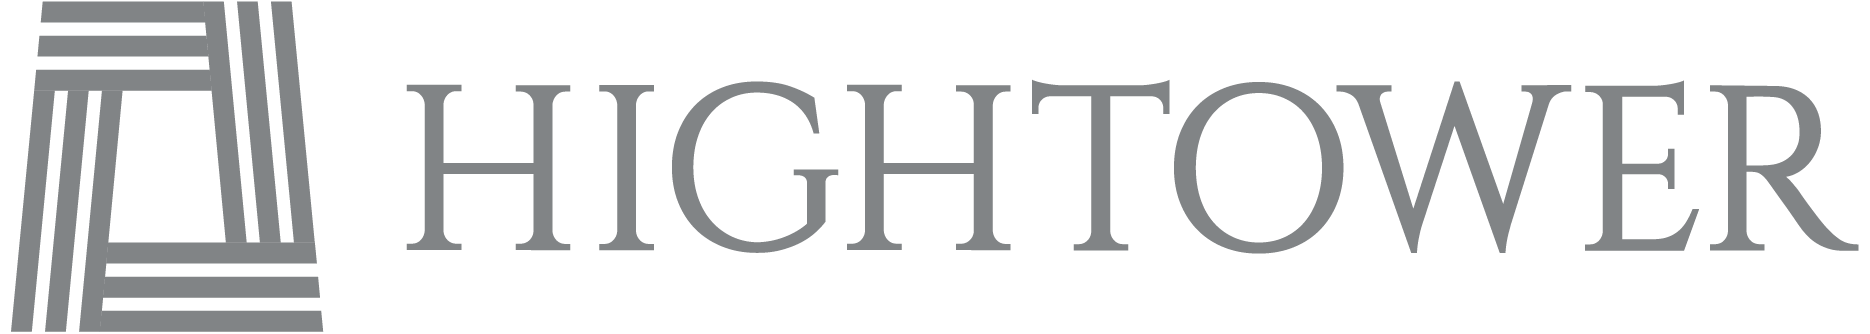 Hierax Footer Hightower Logo